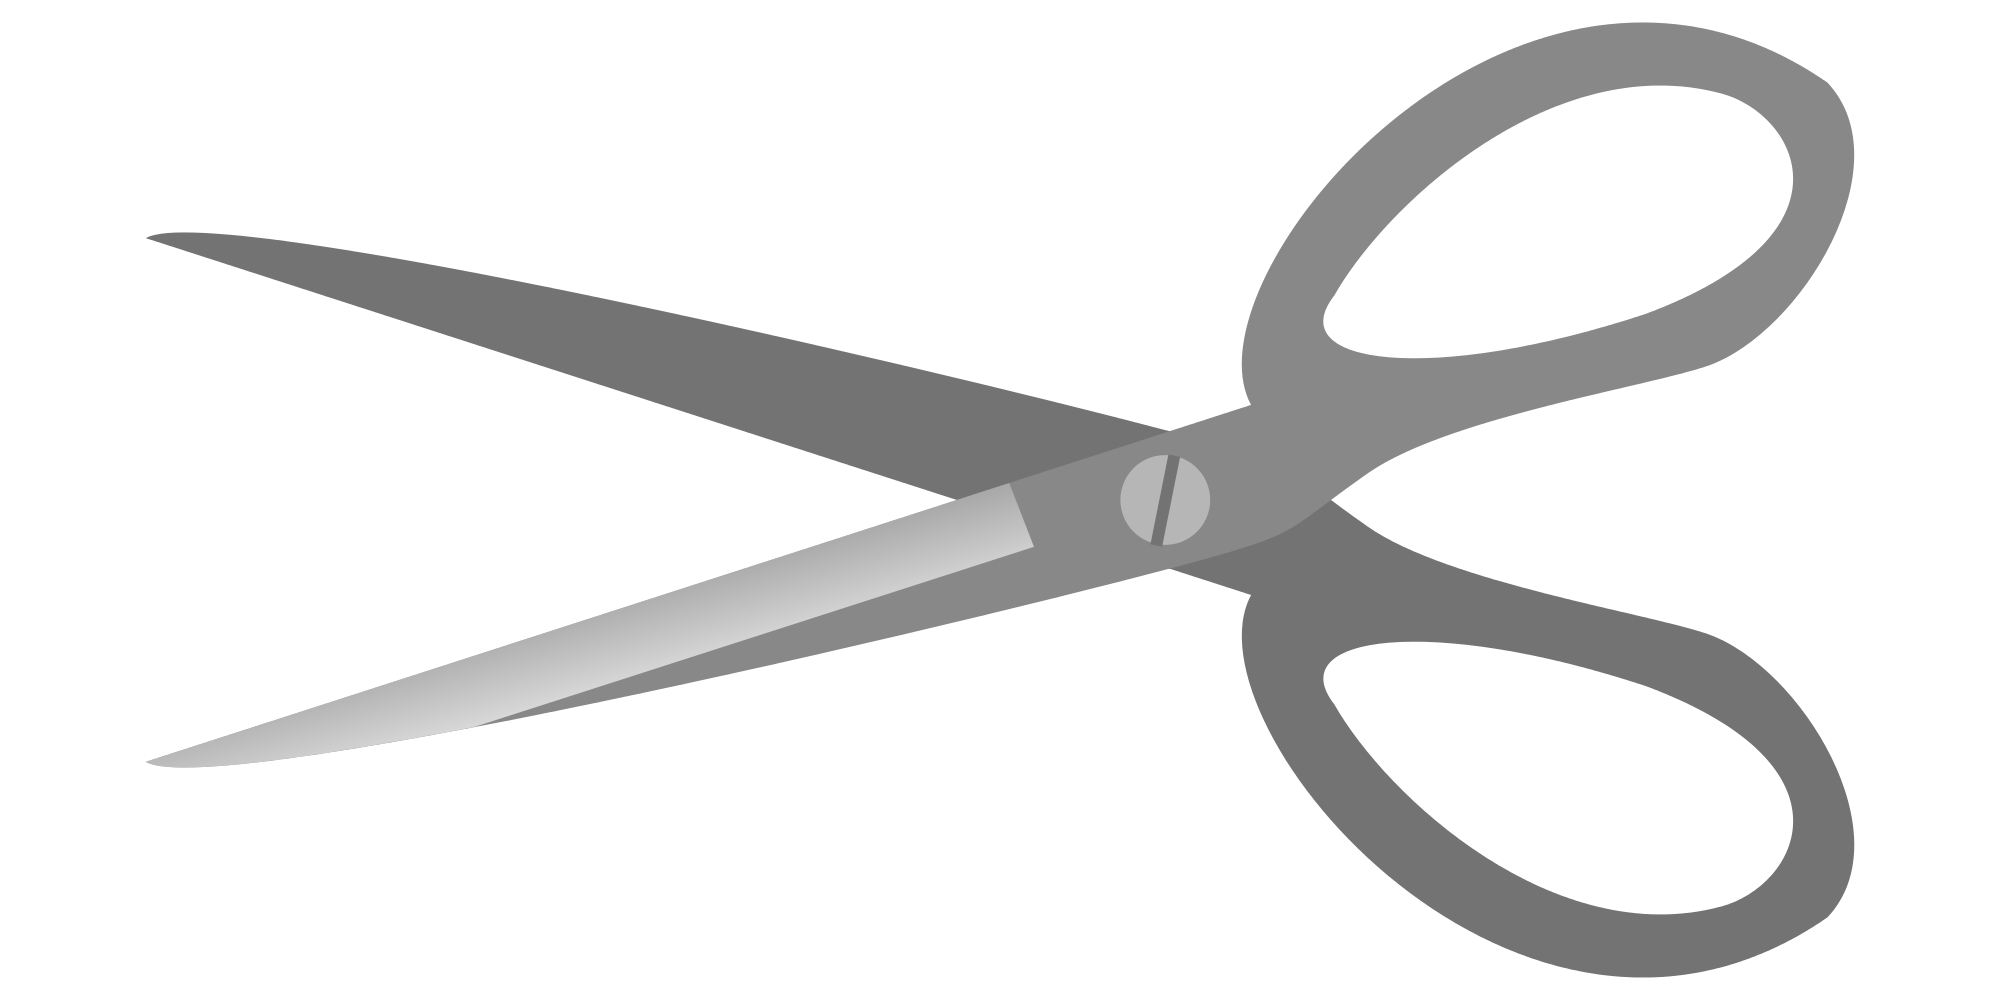 File:Scissors.svg - Wikimedia Commons